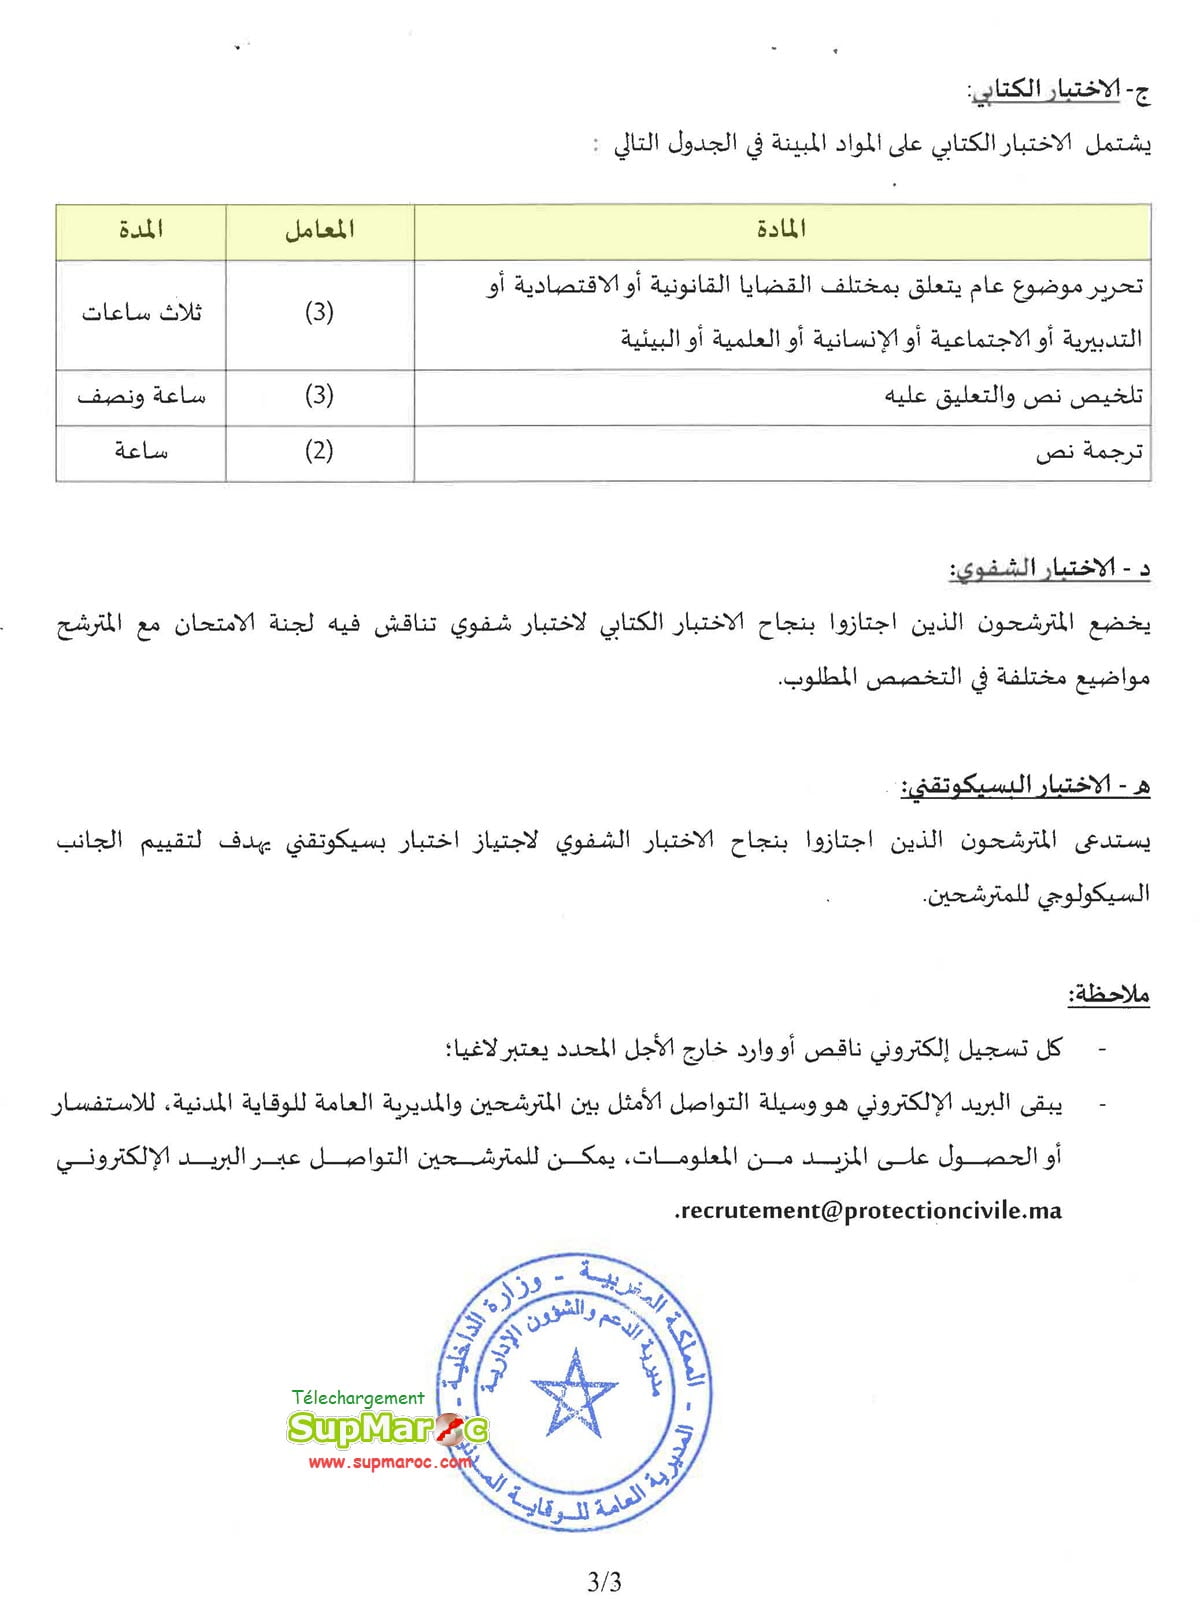 Protection Civile Maroc Recrutement 40 officiers 2021 المديرية العامة للوقاية المدنية ضباط 